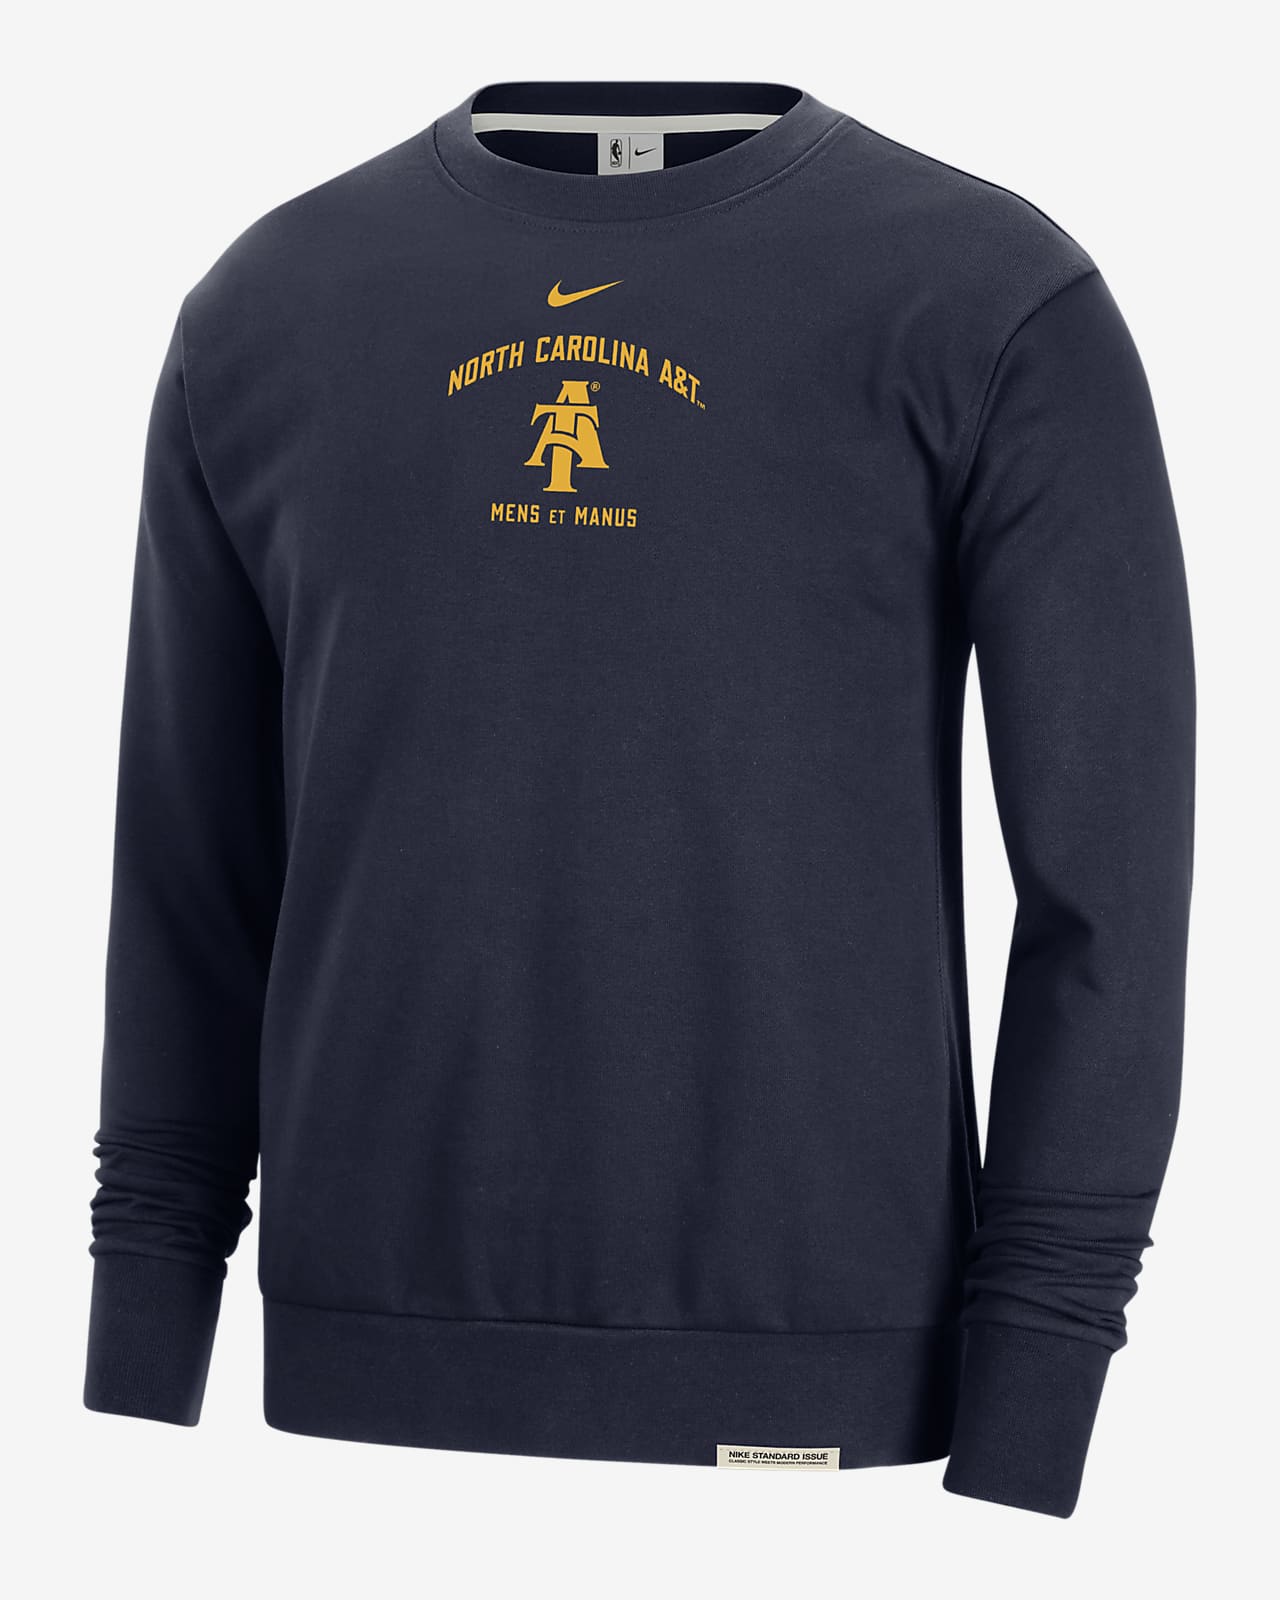 North Carolina A&T Standard Issue Men's Nike College Fleece Crew-Neck Sweatshirt